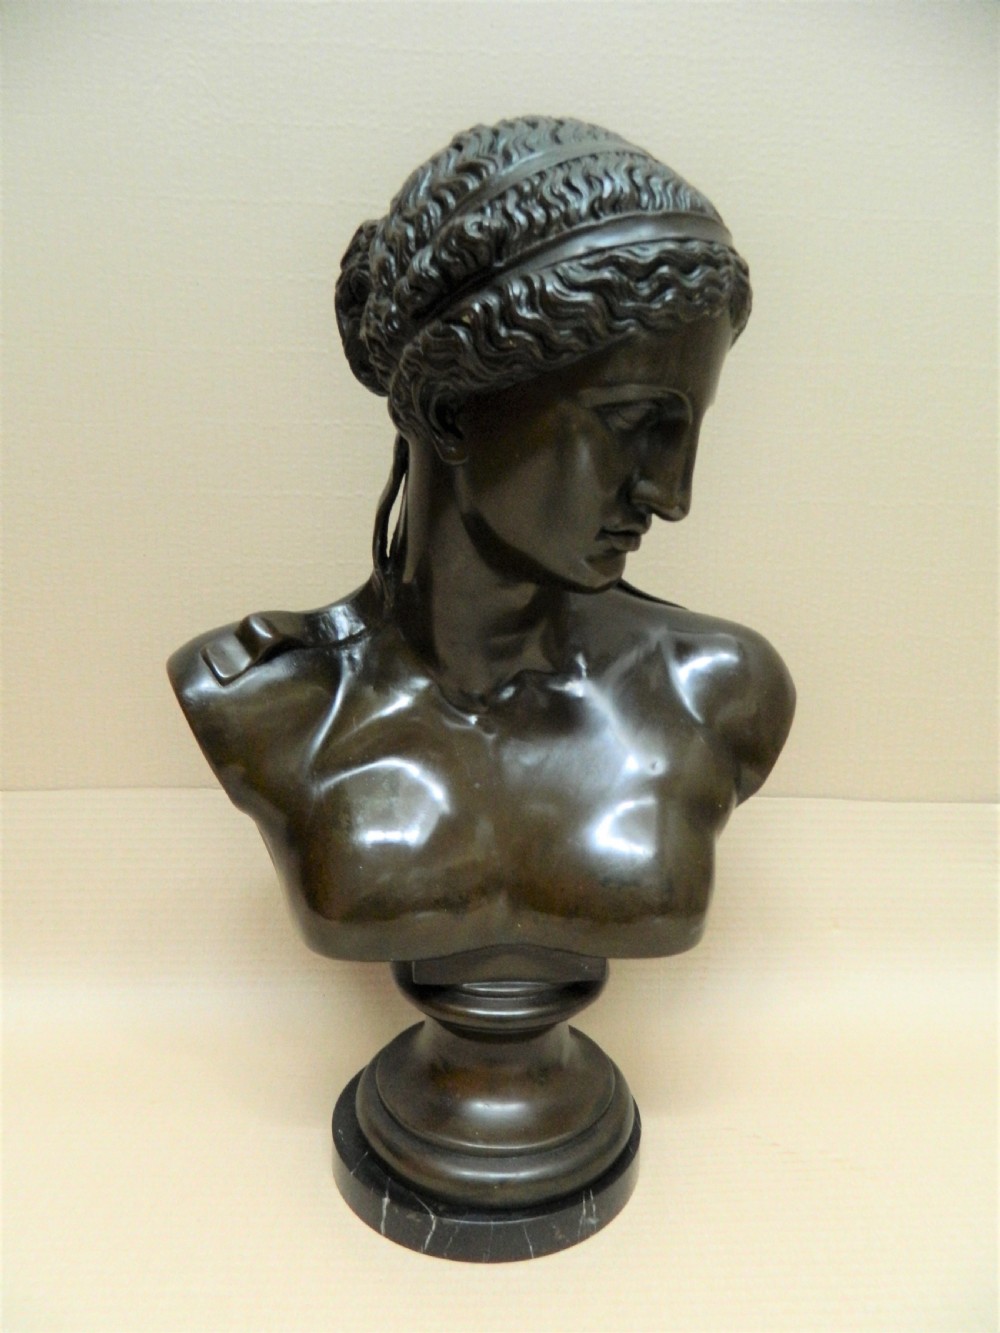 19th century bronze bust